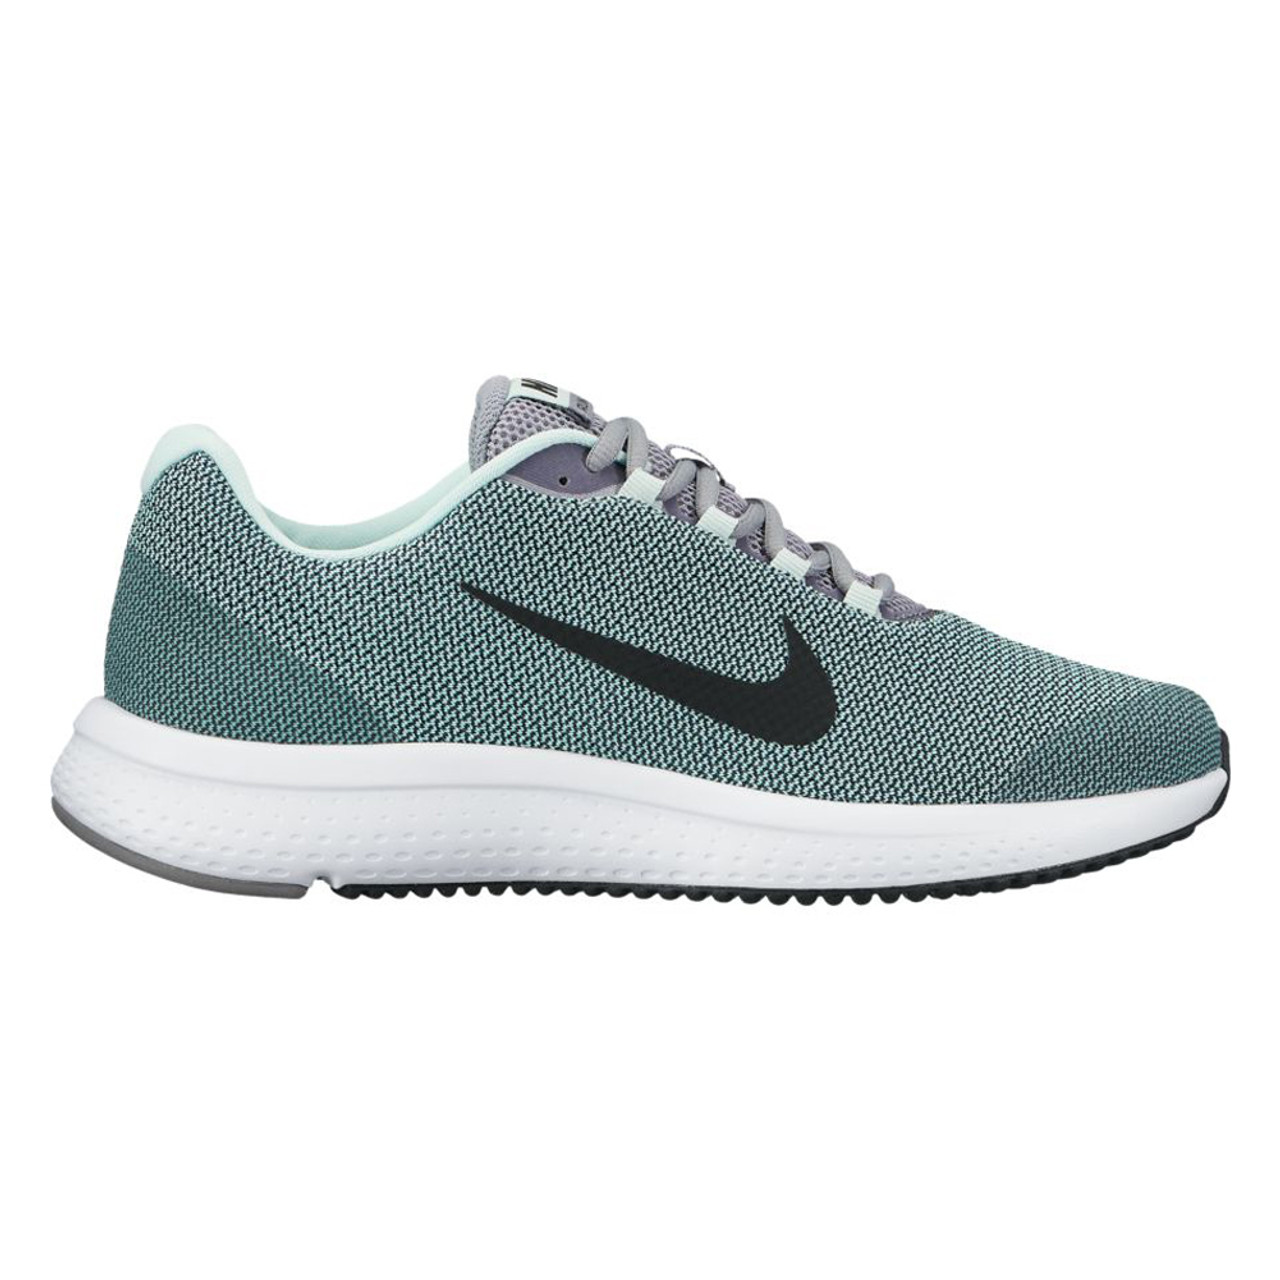 Nike Women's Runallday Running Shoe - Grey | Discount Nike Ladies Athletic  & More - Shoolu.com | Shoolu.com